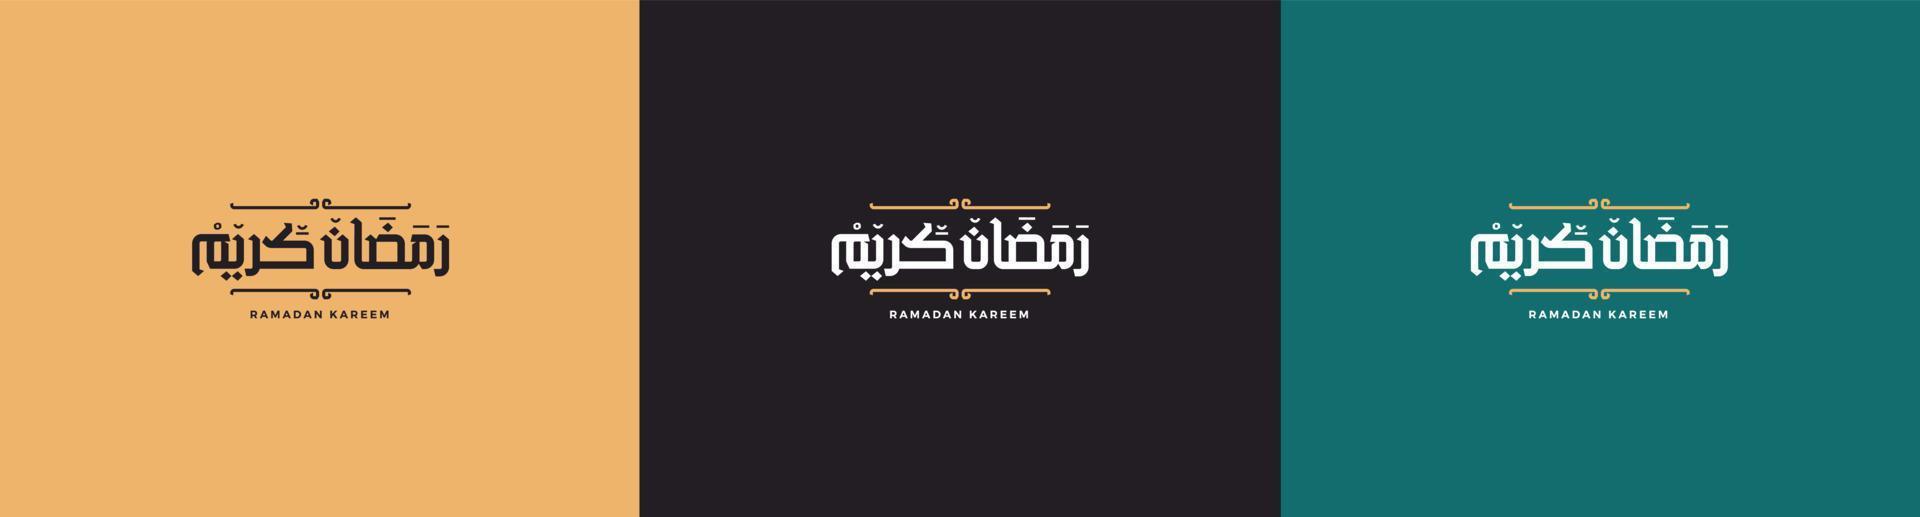 Kareem Ramadan. ramadan moubarak. traduit joyeux, saint ramadan. mois de jeûne pour les musulmans. typographie arabe. vecteur